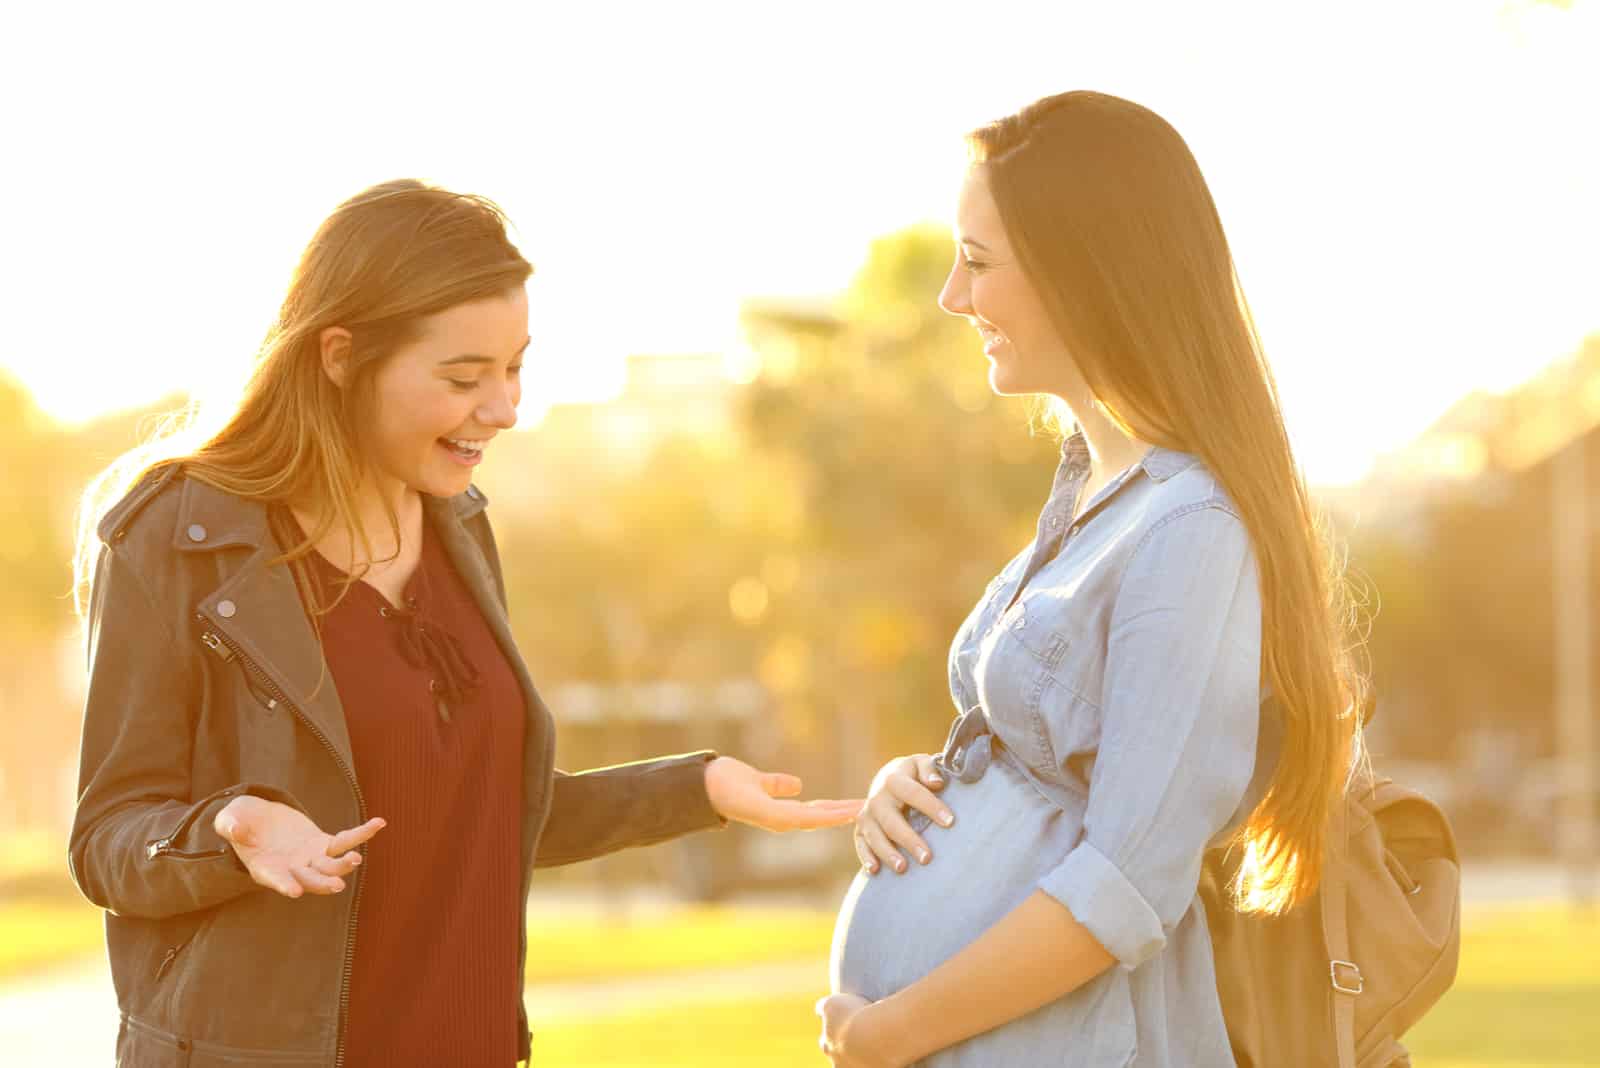 donna sorpresa di vedere l'amica incinta